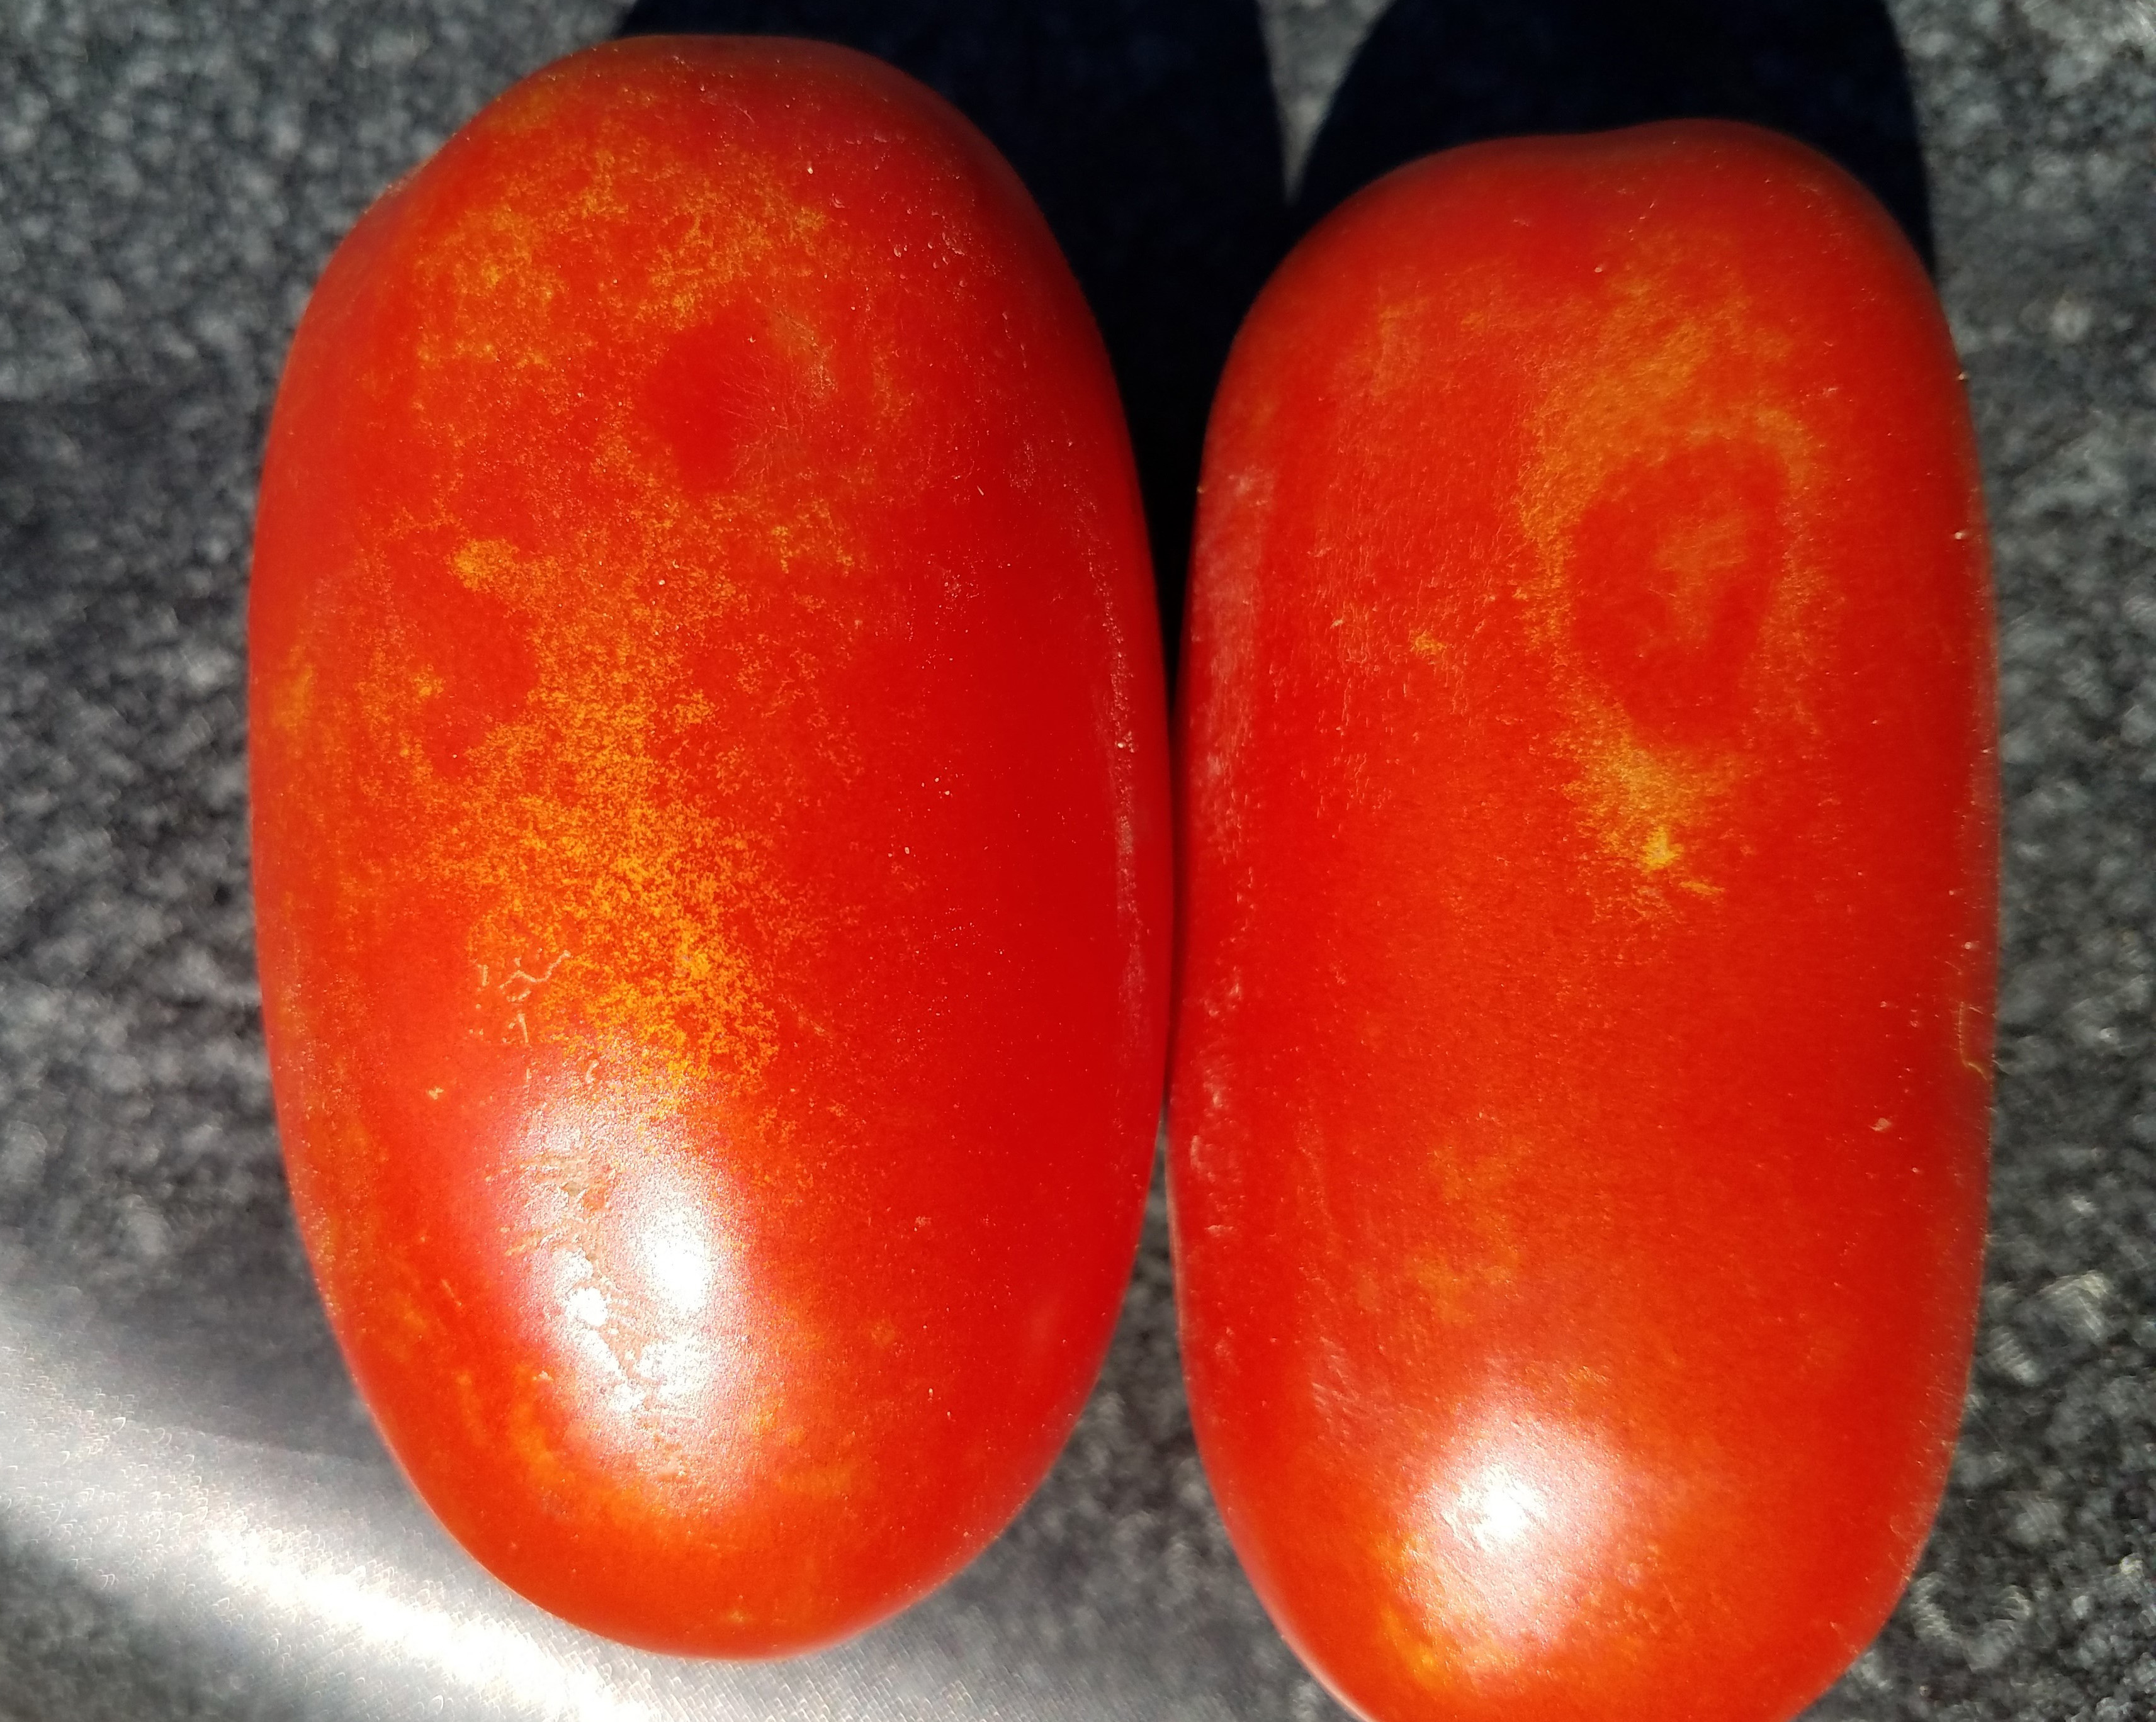 Thrips damage on tomato